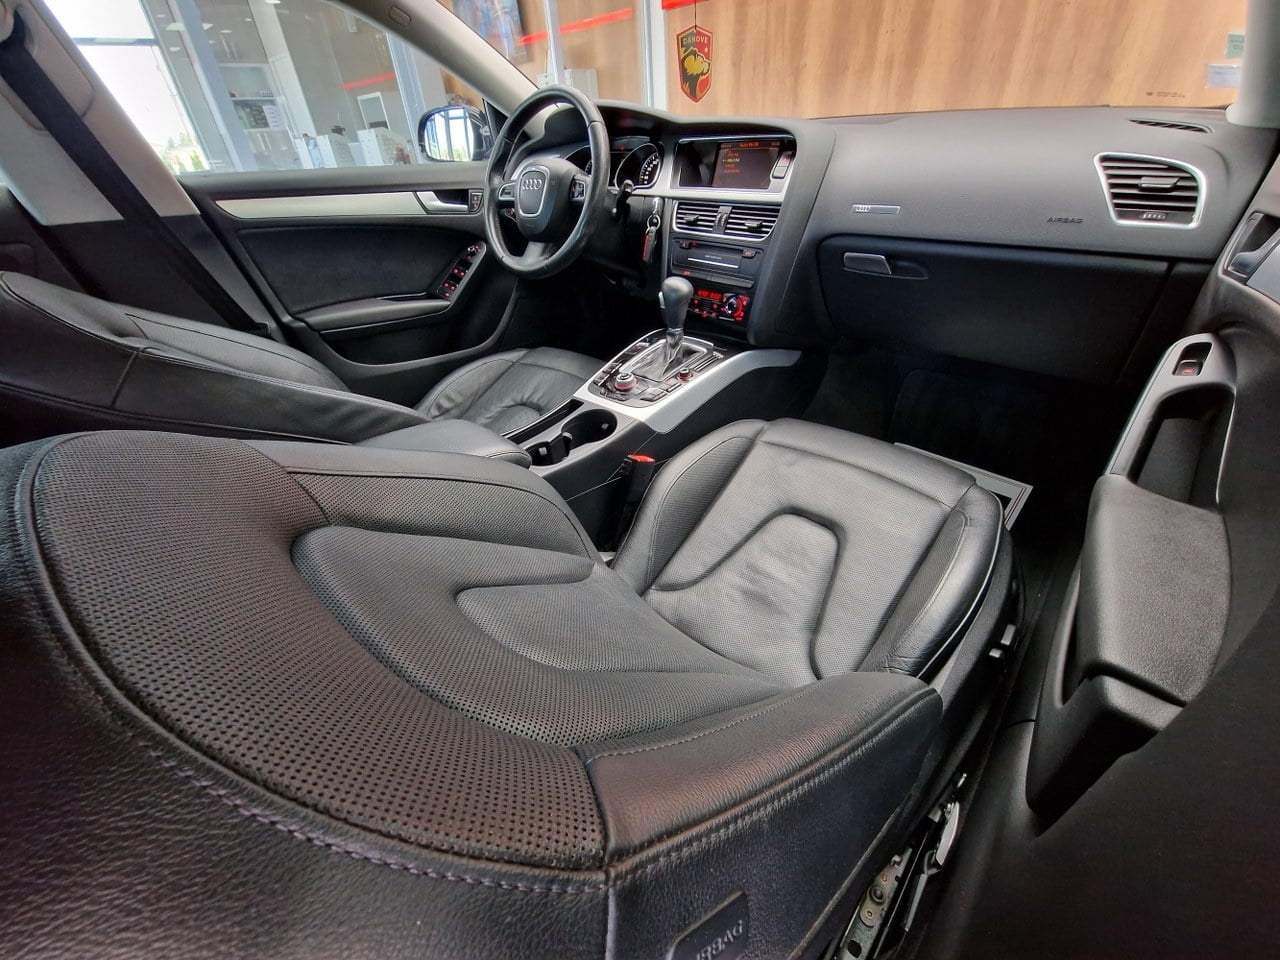 Locatie Arad – Audi A5, AUTOMAT in RATE FIXE, Livrare GRATUITA, 12 Luni GARANTIE full